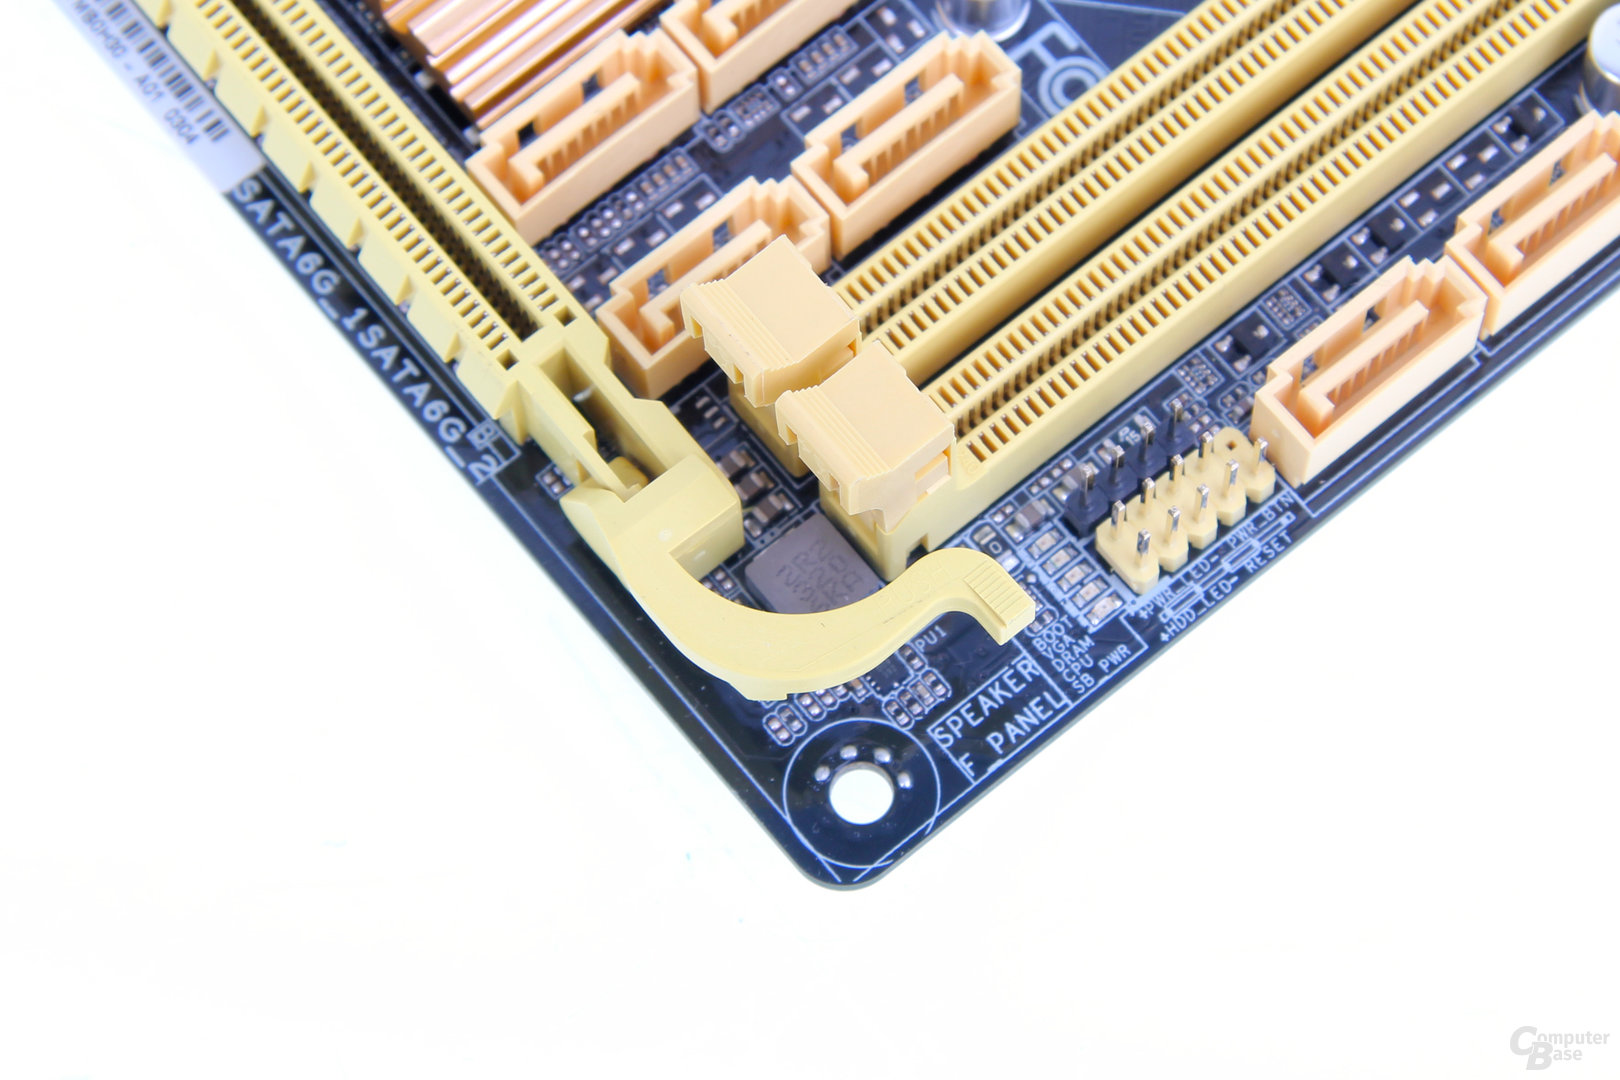 Asus Z87I-Pro - Speicherbänke vs. PCIe